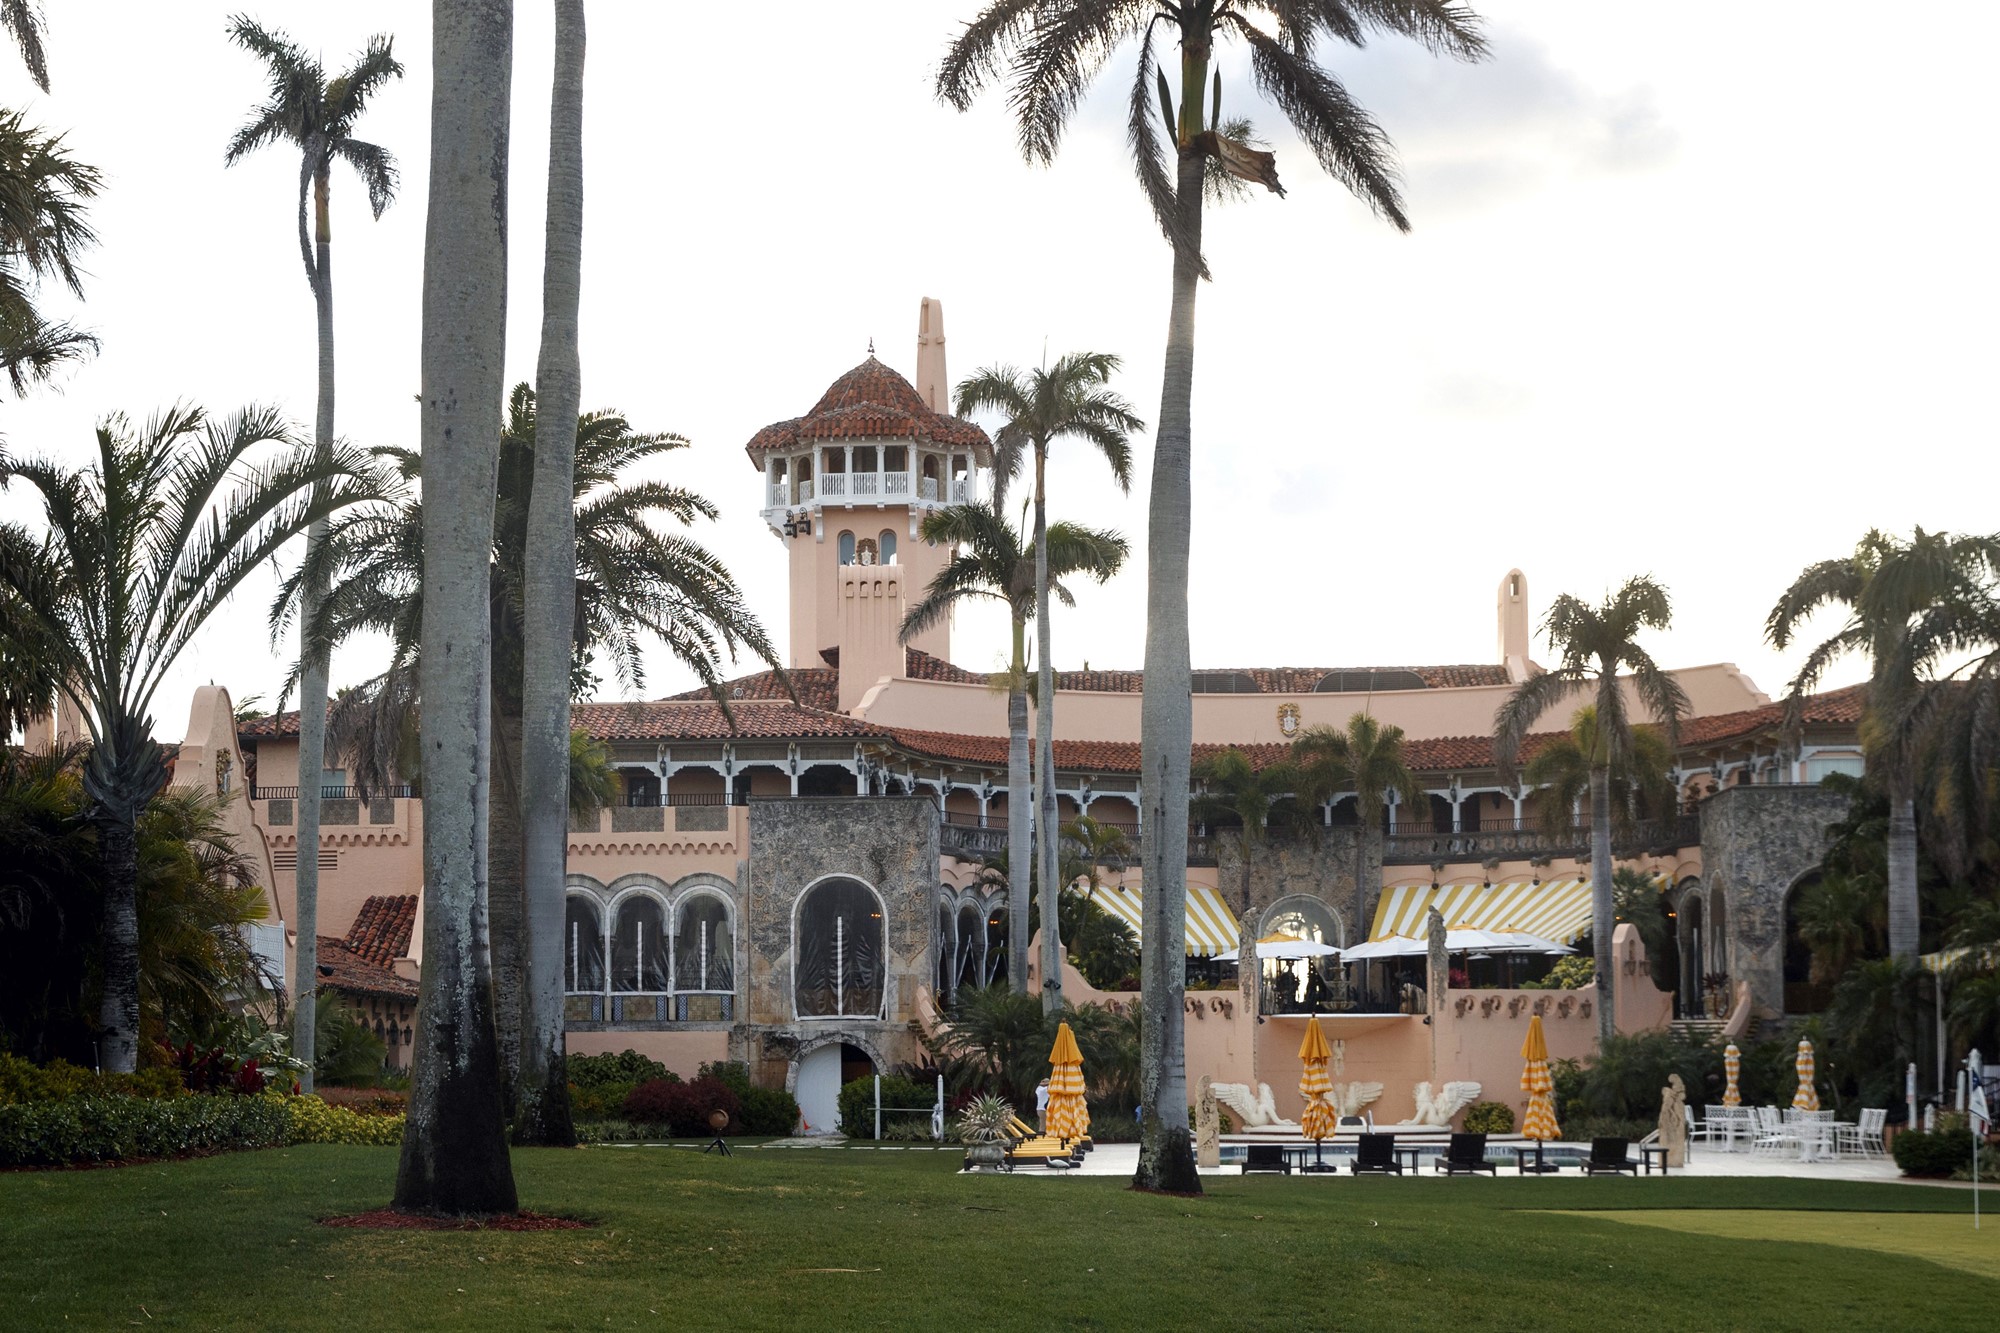 Donald Trump's Mar-a-Lago estate.